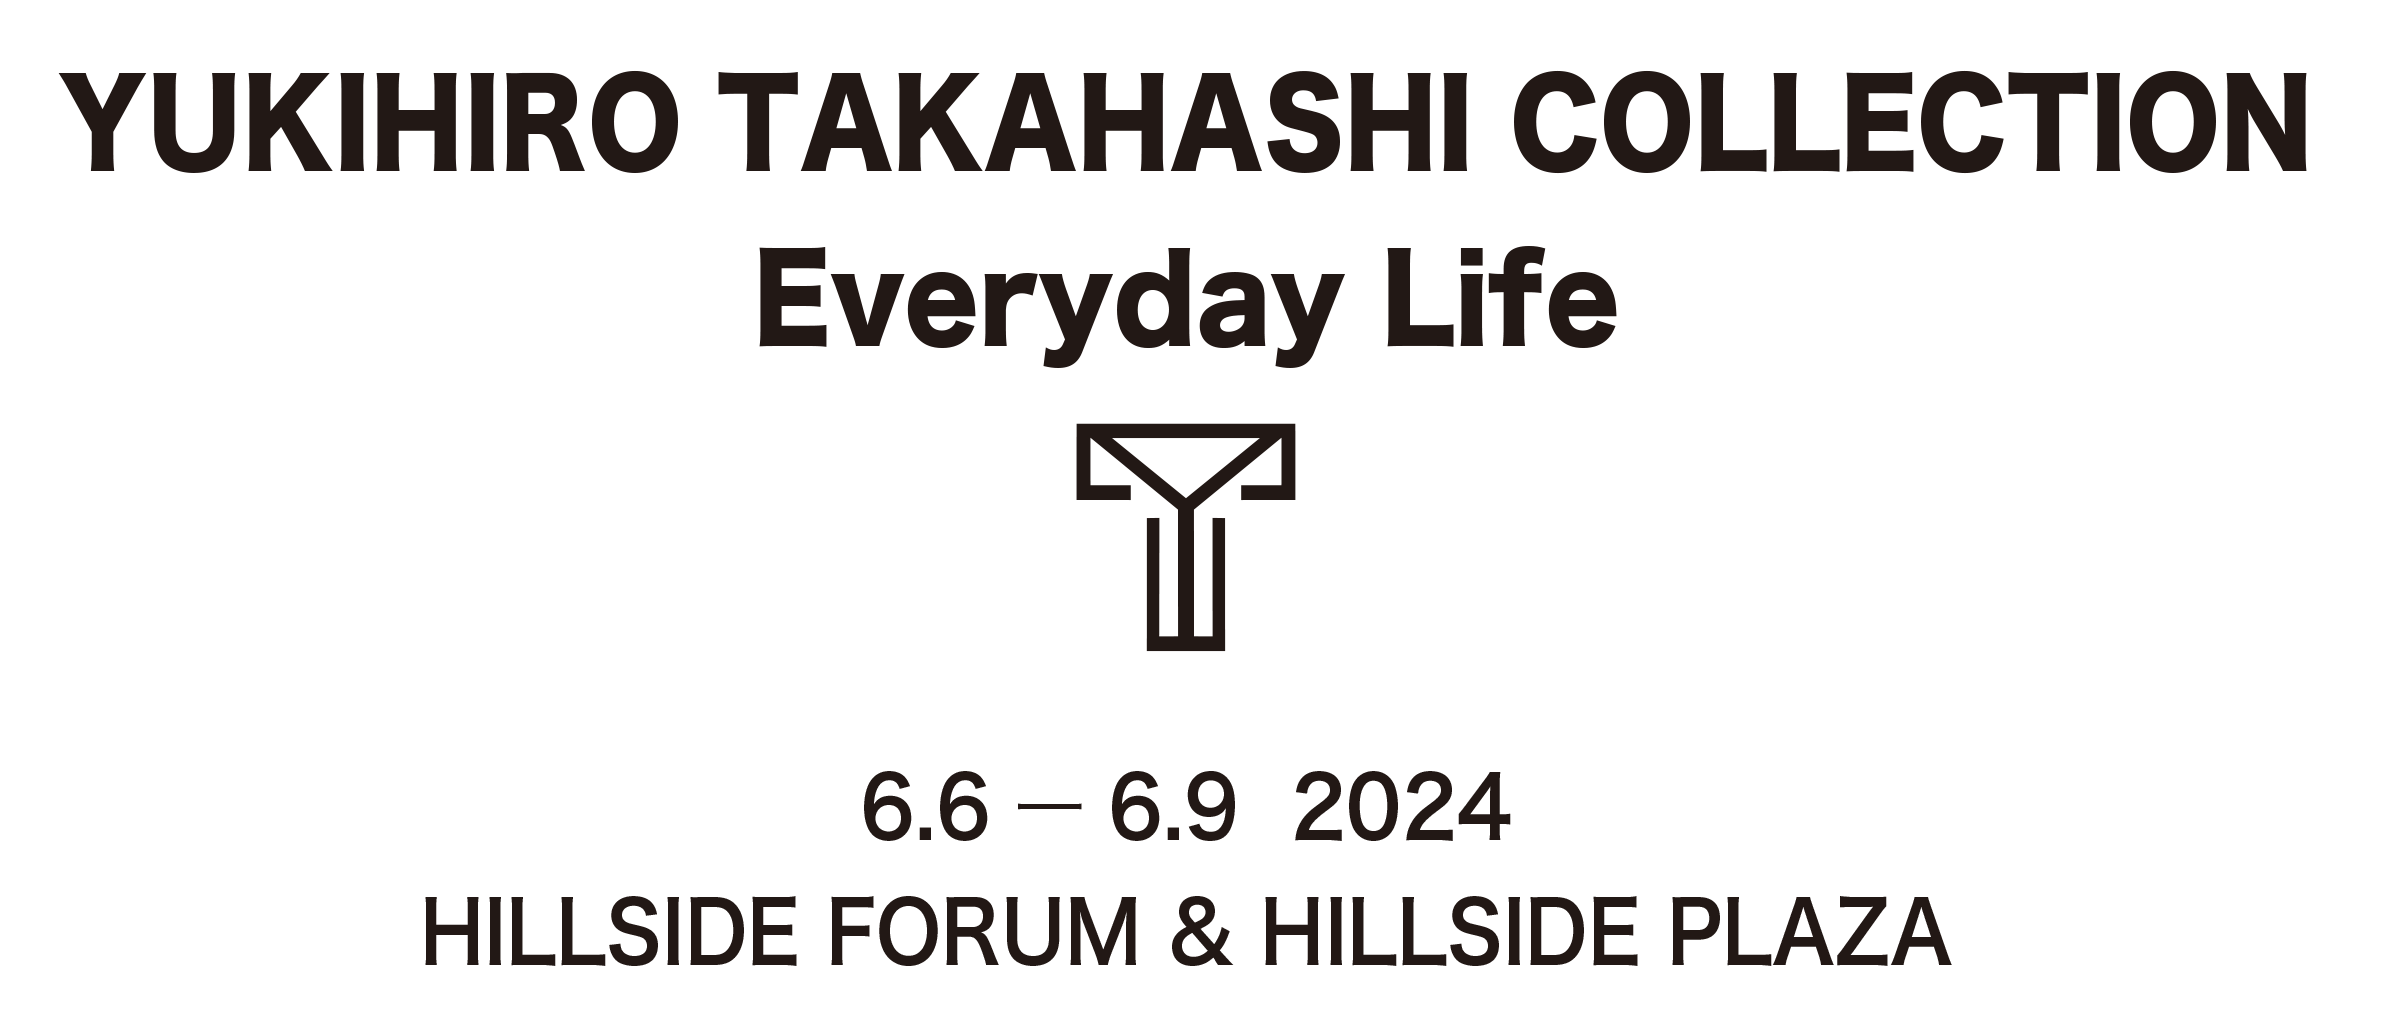 YUKIHIRO TAKAHASHI COLLECTION Everyday Life